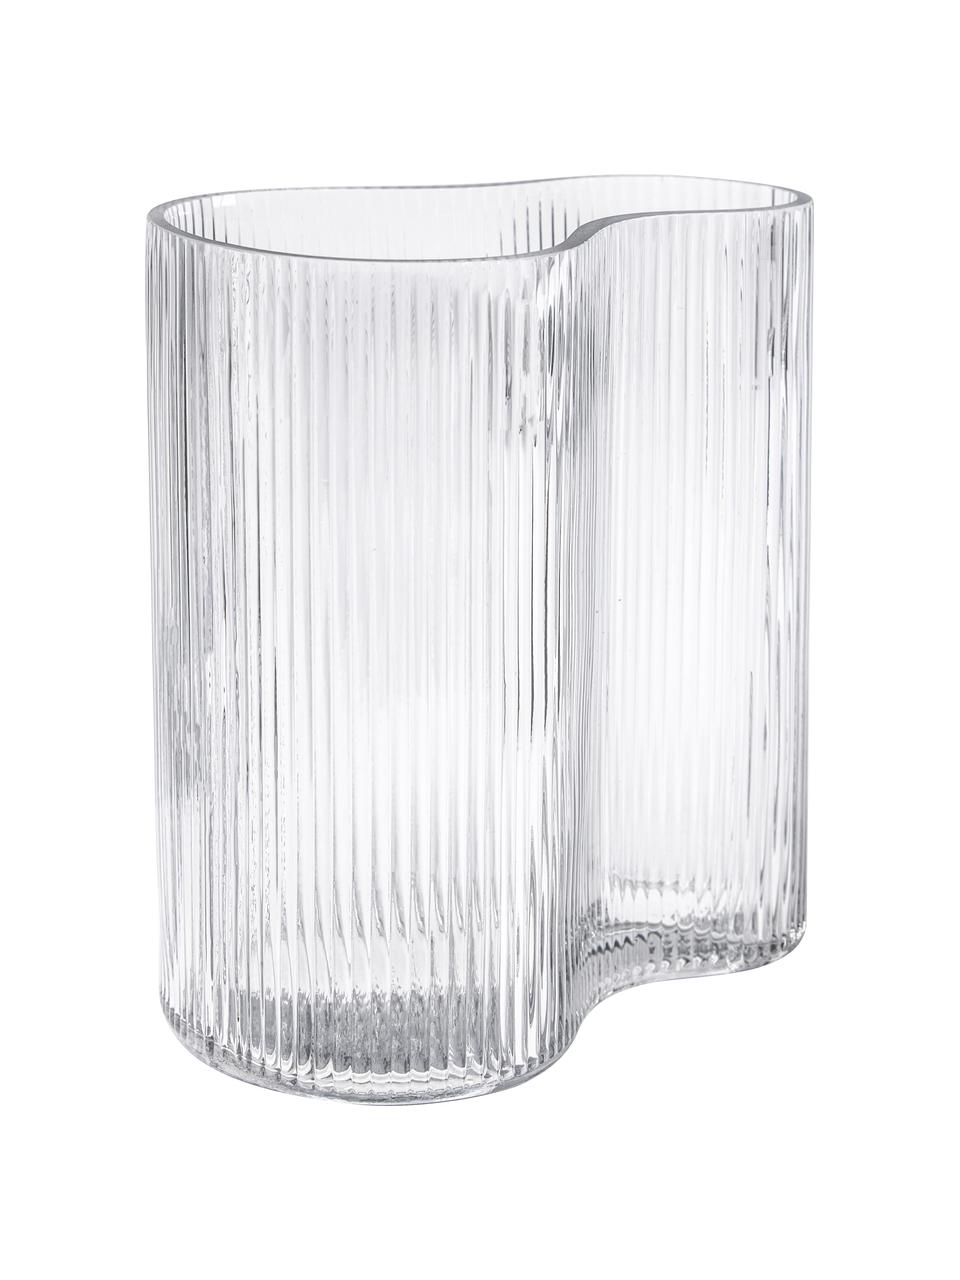 Mondgeblazen glazen vaas Dawn met groefreliëf, Glas, Transparant, B 19 cm x H 20 cm